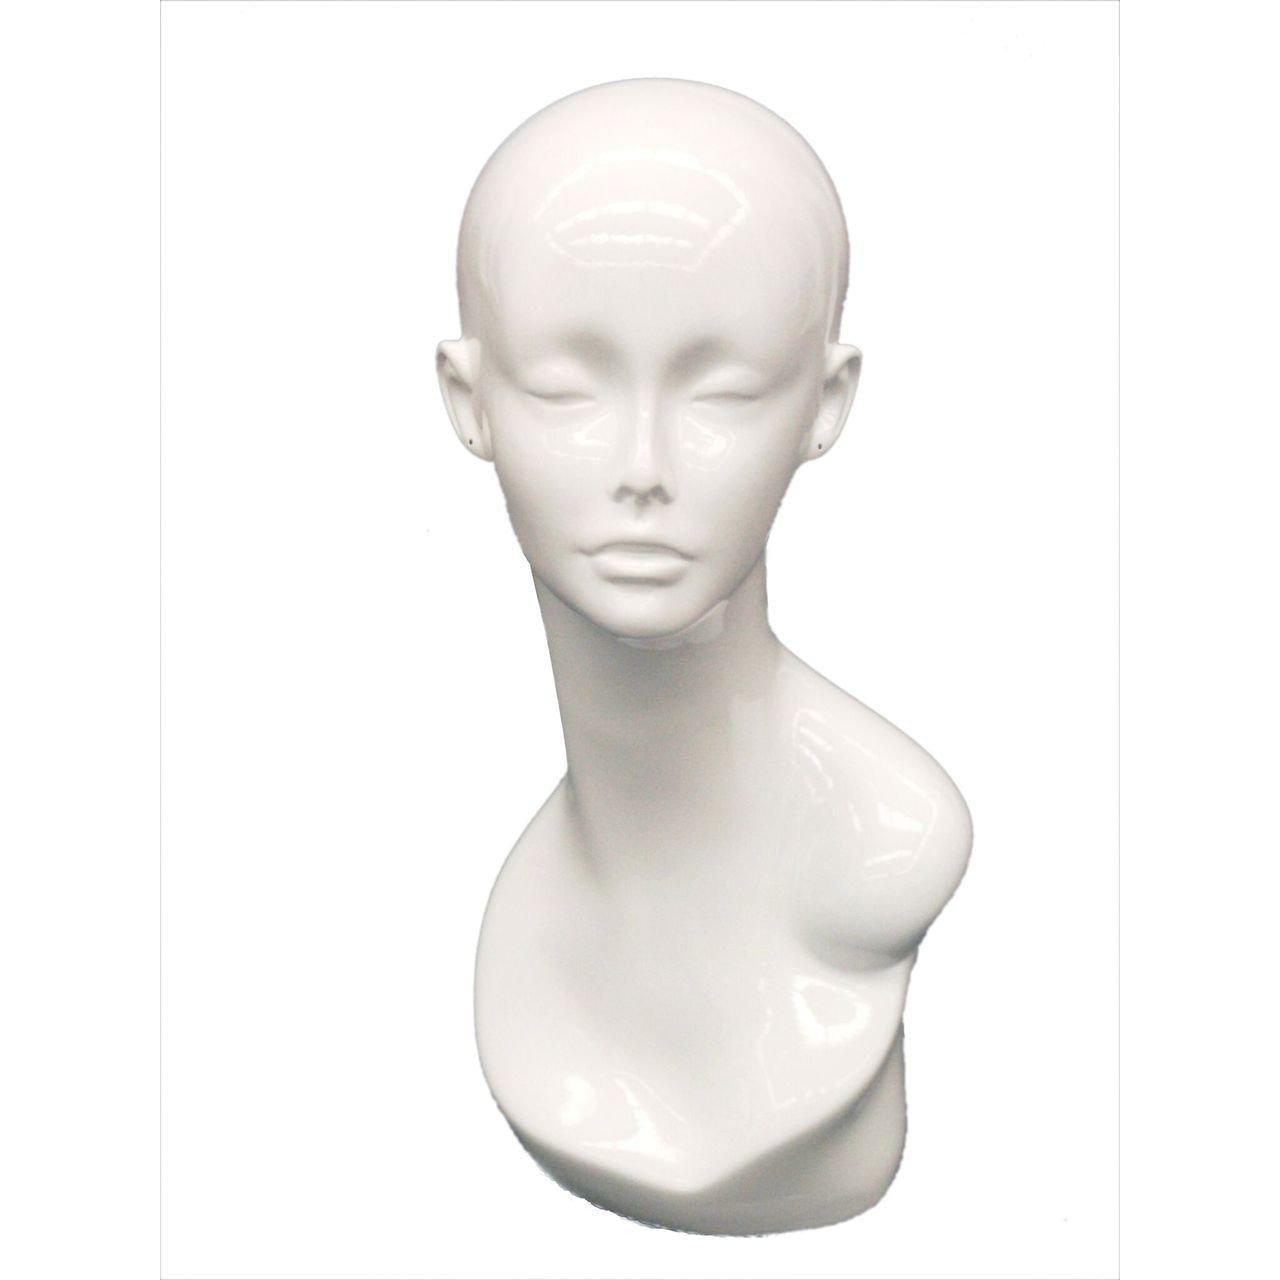 Megan: Female Mannequin Head with Partial Chest